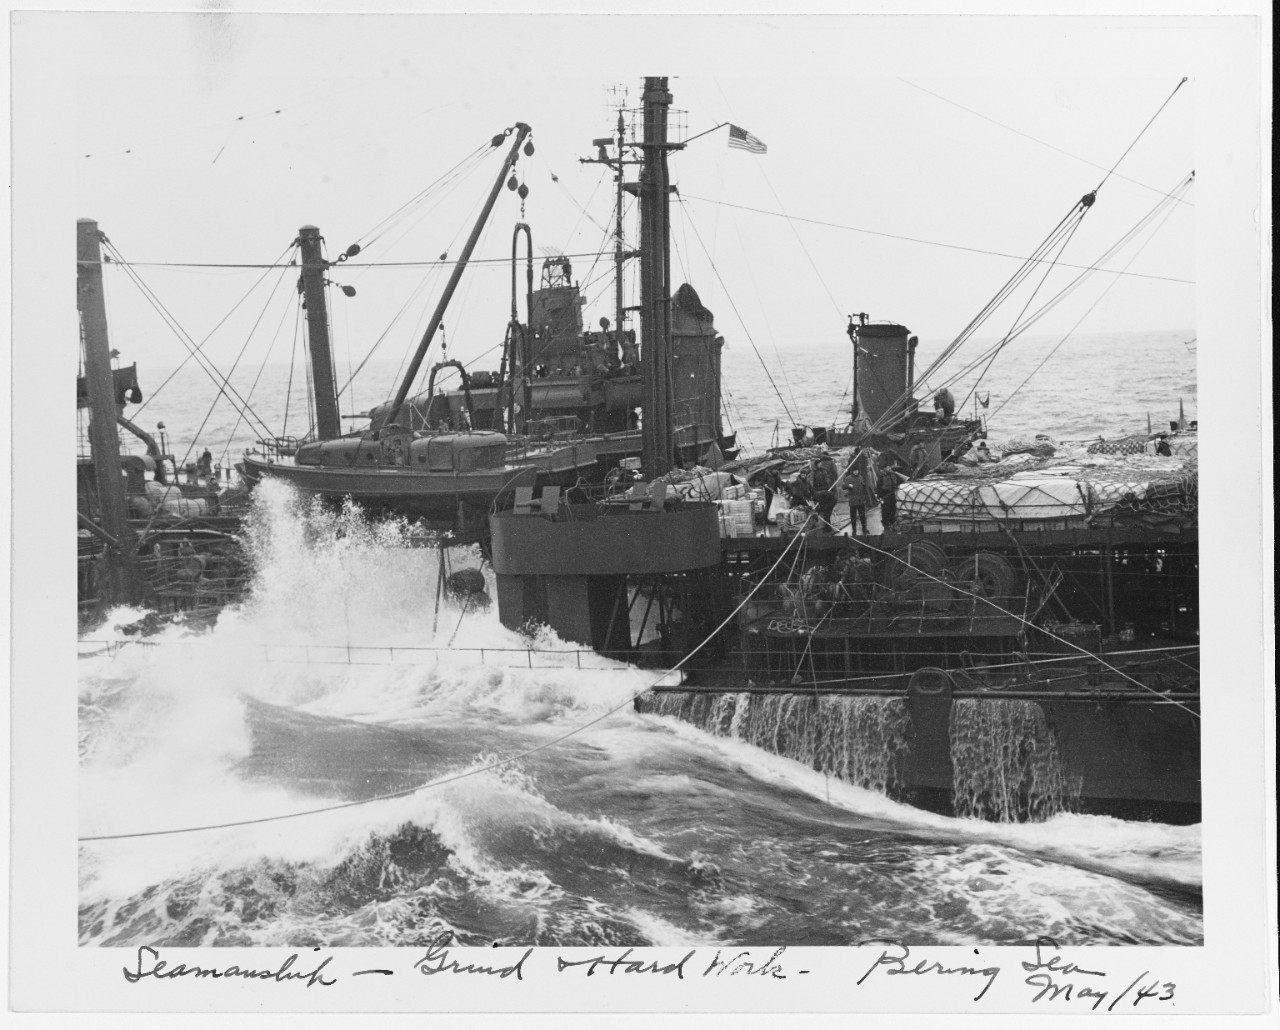 Photo #: NH 94643  &quot;Seamanship -- Grind &amp; Hard Work - Bering Sea May '43&quot;